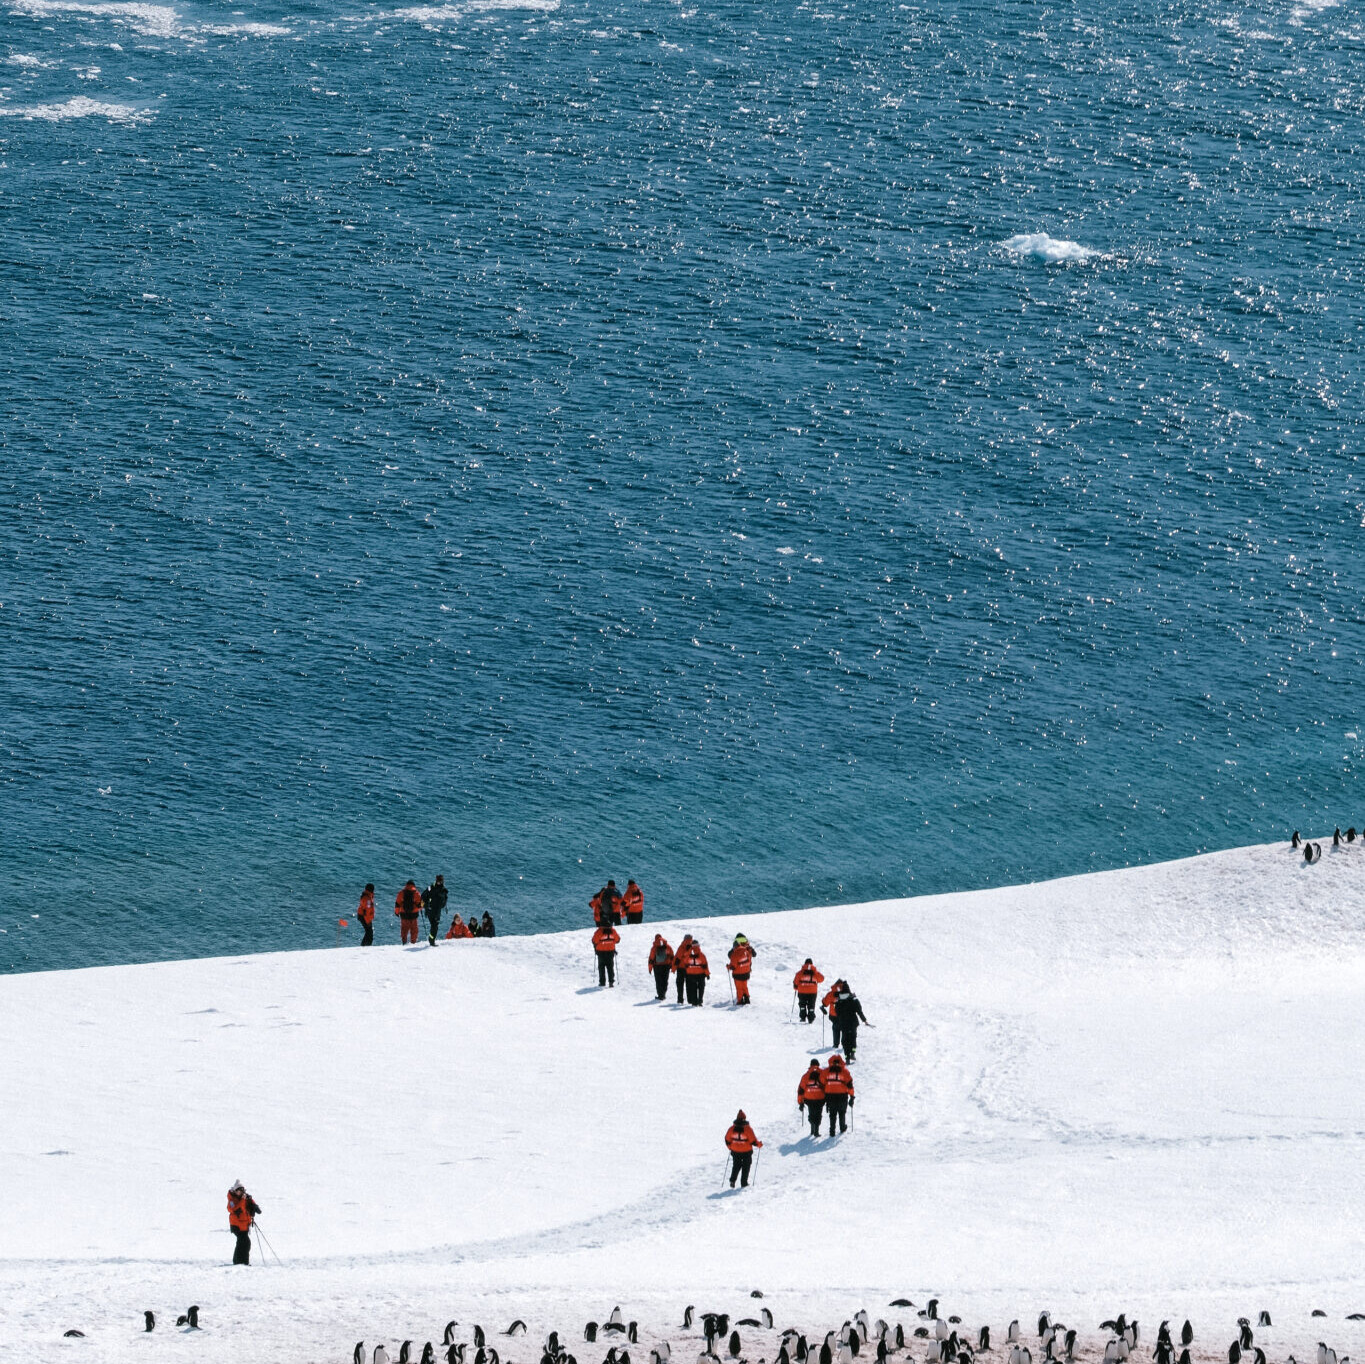 Photography Isabelle Vermeersch for Voyage Voyage in Antarctica